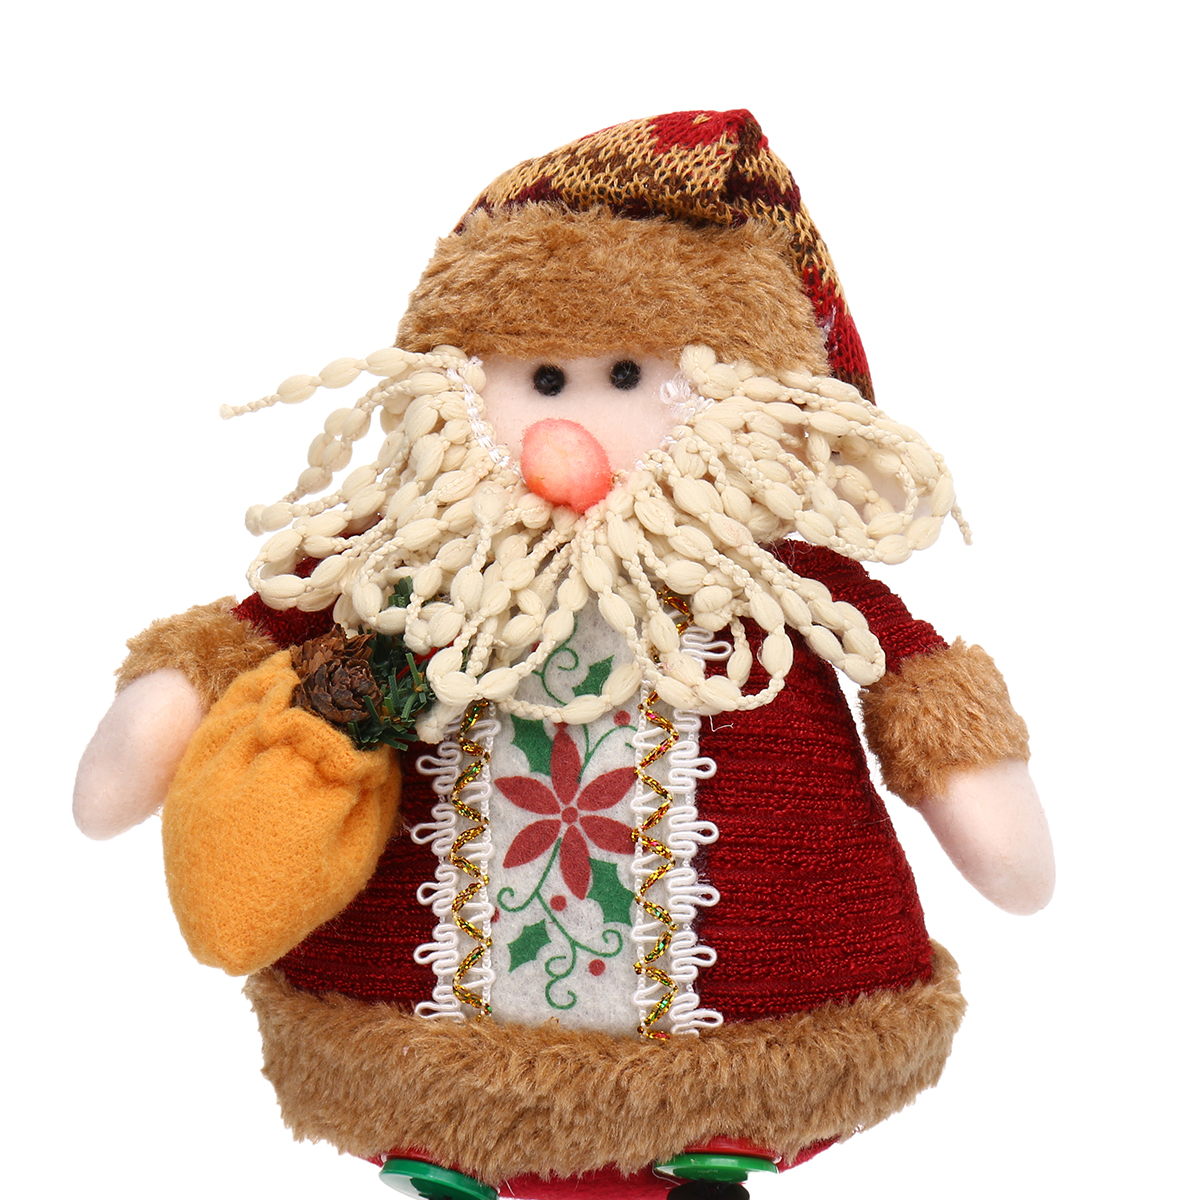 Santa-Snowman-Reindeer-Doll-Christmas-Decoration-Tree-Hanging-Ornament-Gift-1352337-9